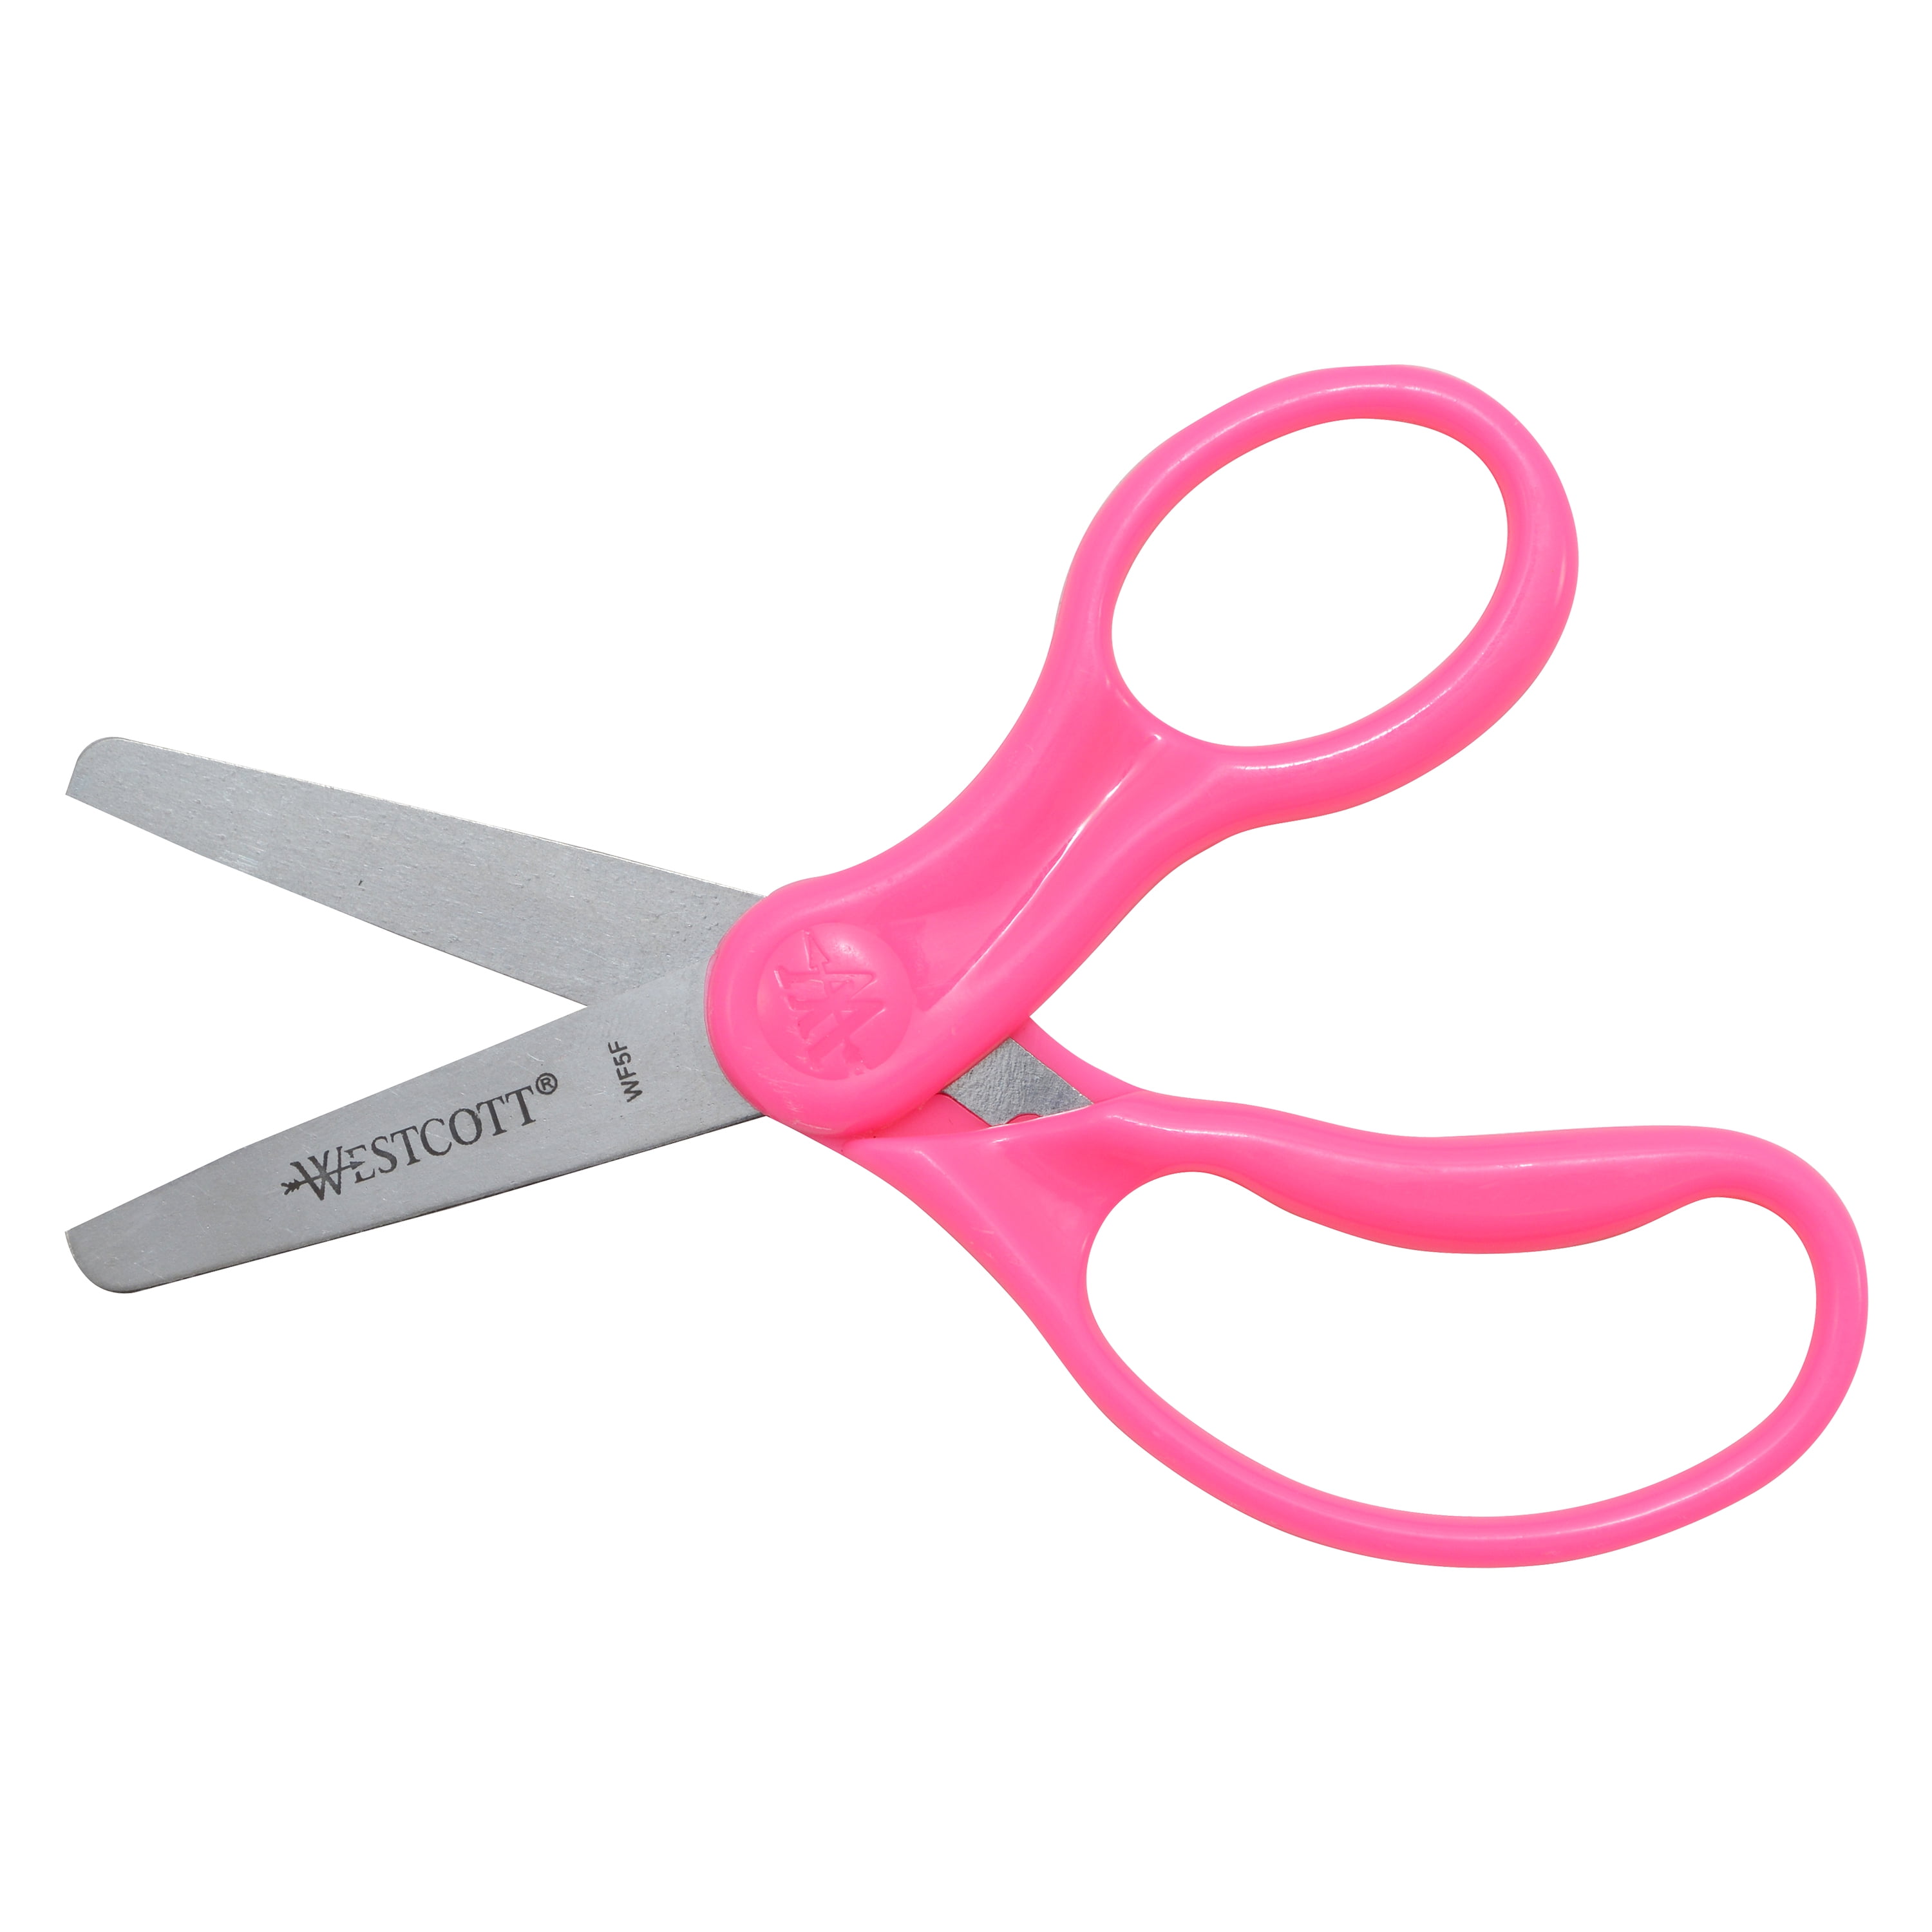 W.A. Portman wa portman 5 inch blunt kids scissors 6 pack - school scissors  bulk scissors - blunt